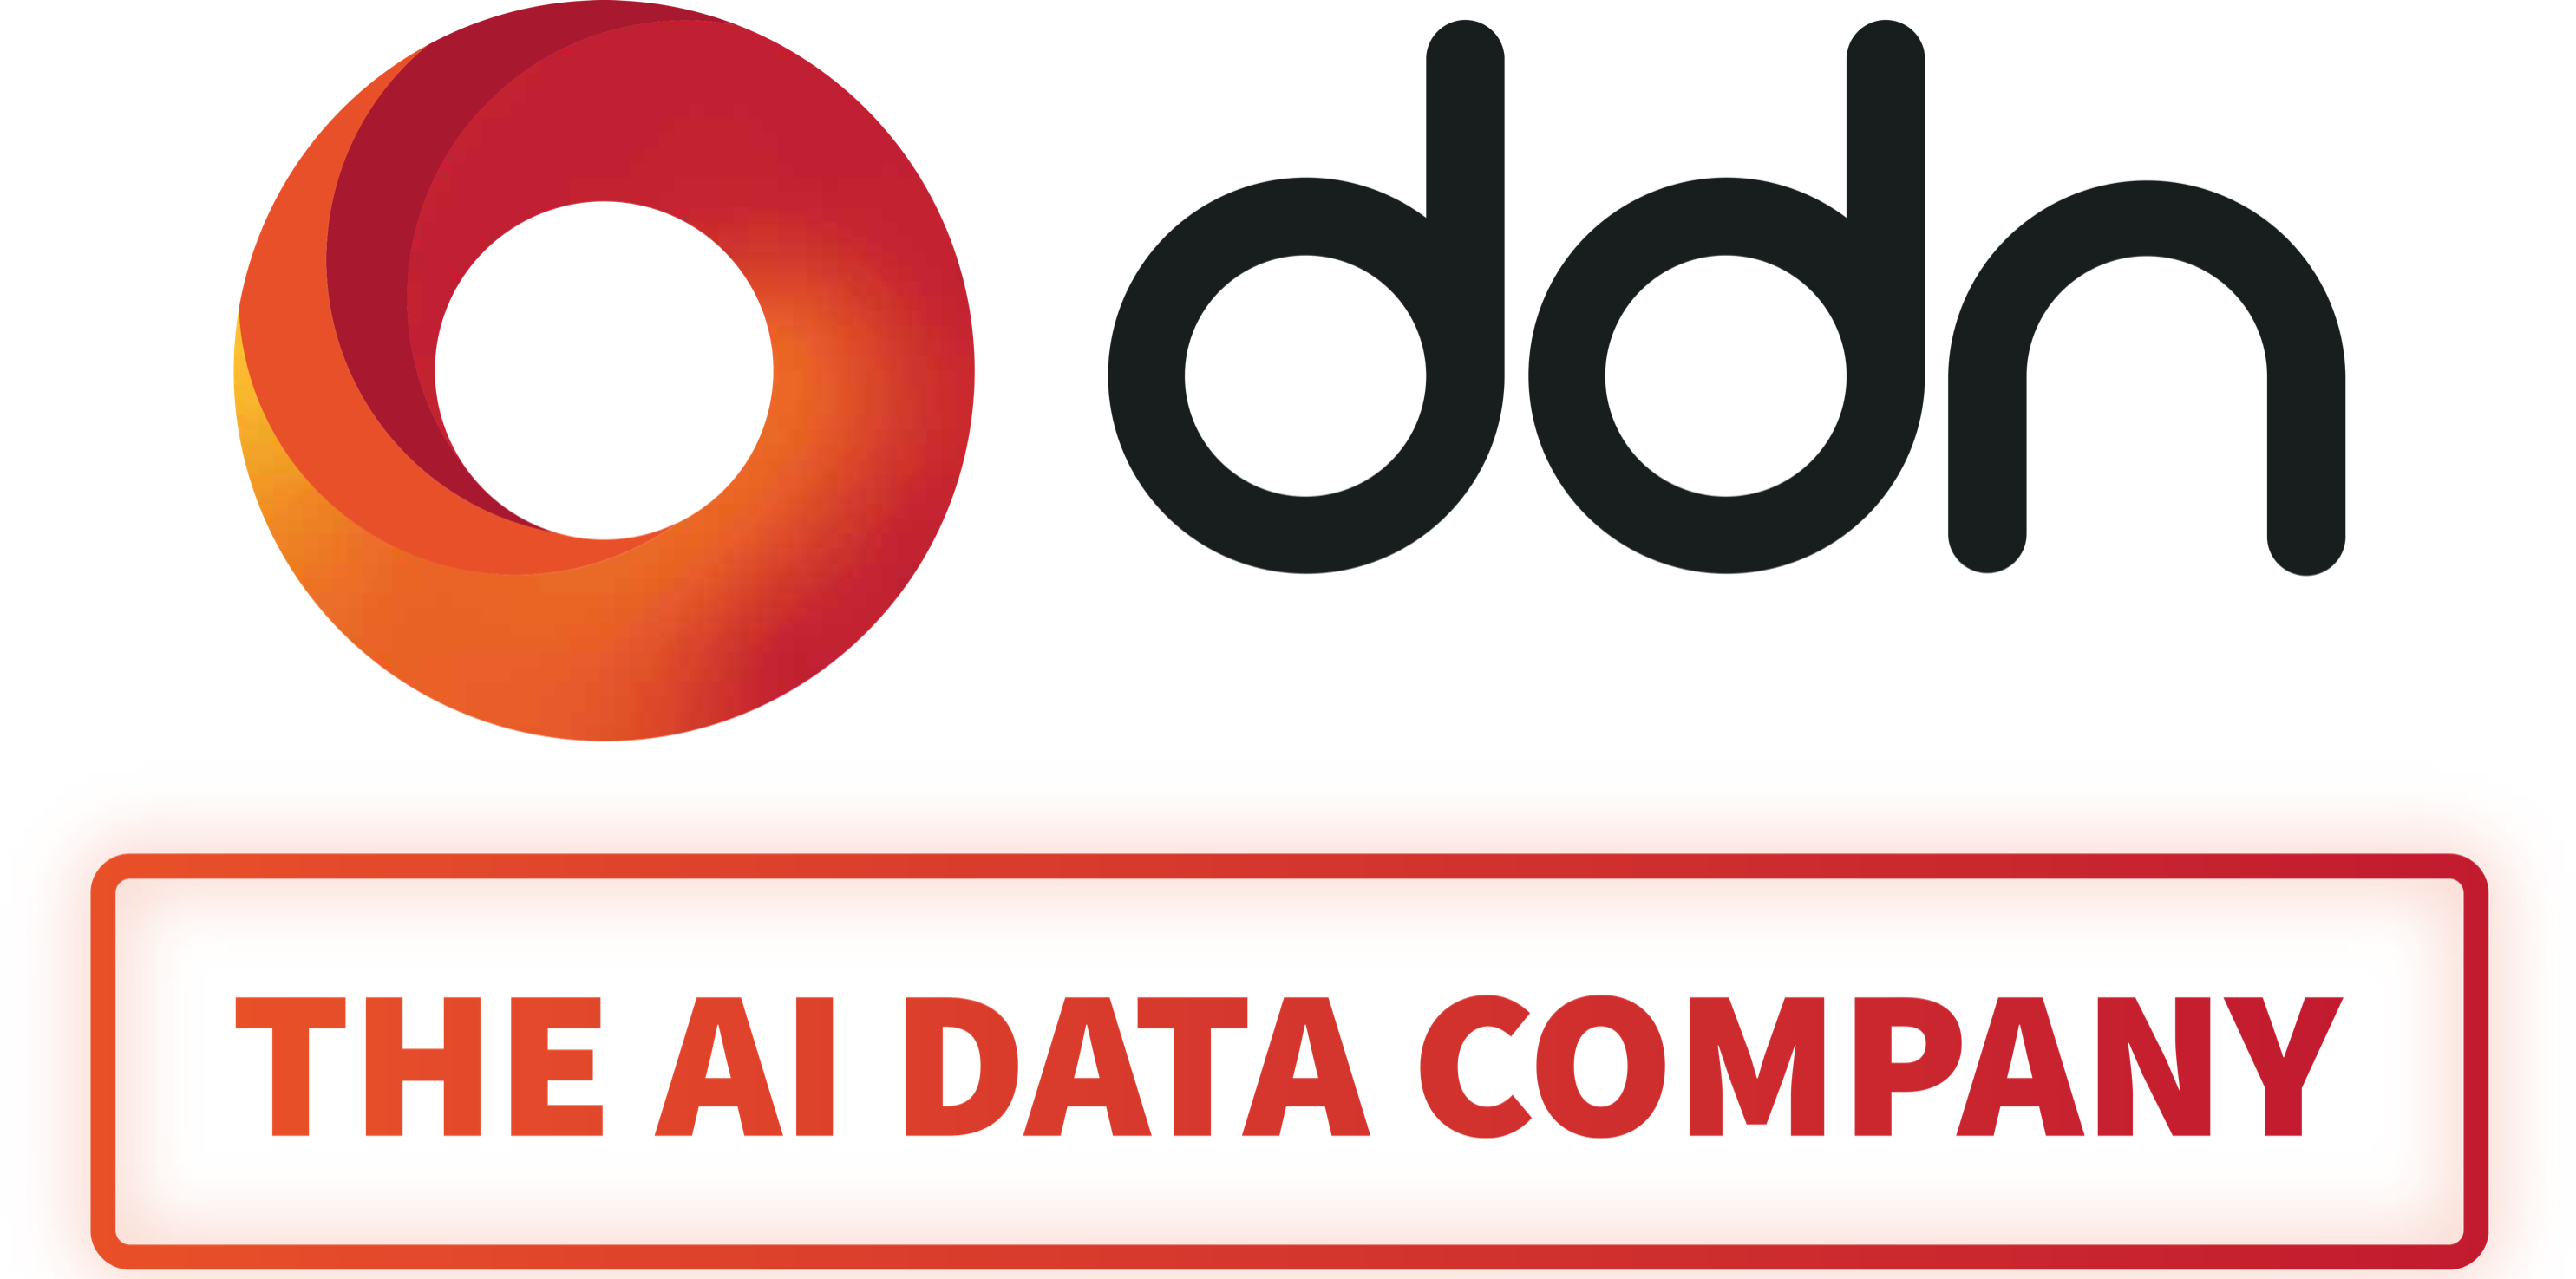 DDN - The Ai Data Company